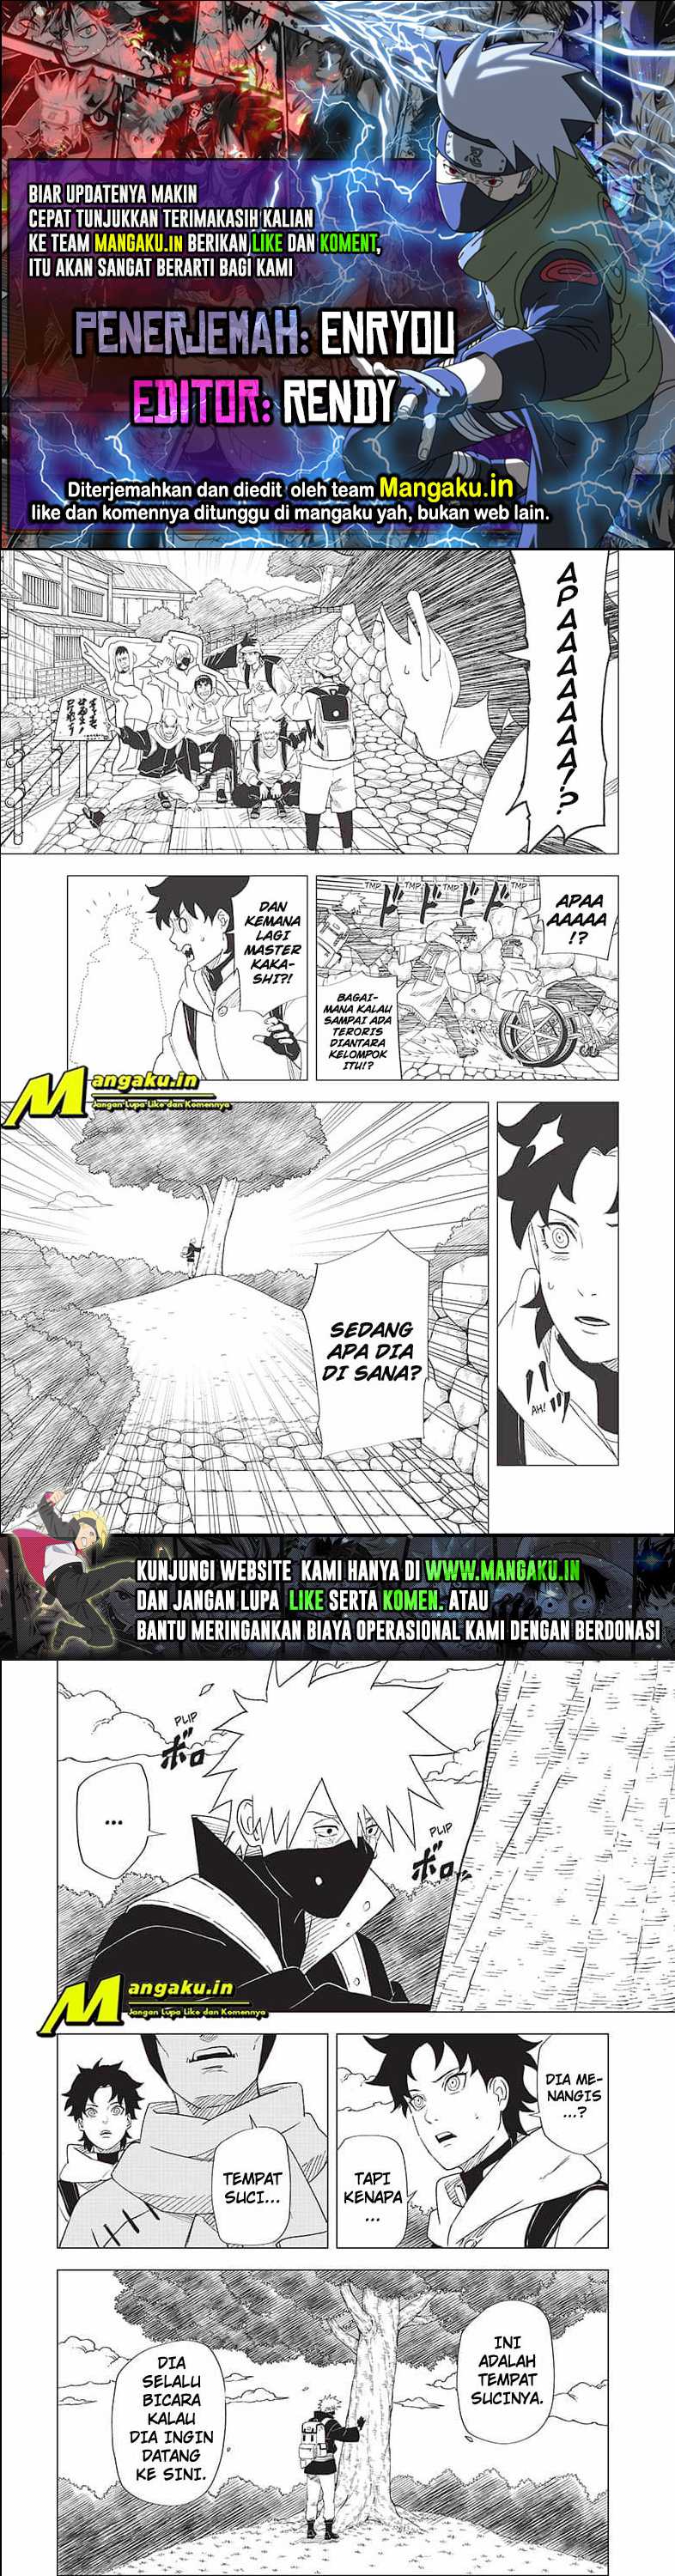 Naruto: Konoha’s Story—The Steam Ninja Scrolls Chapter 03.2